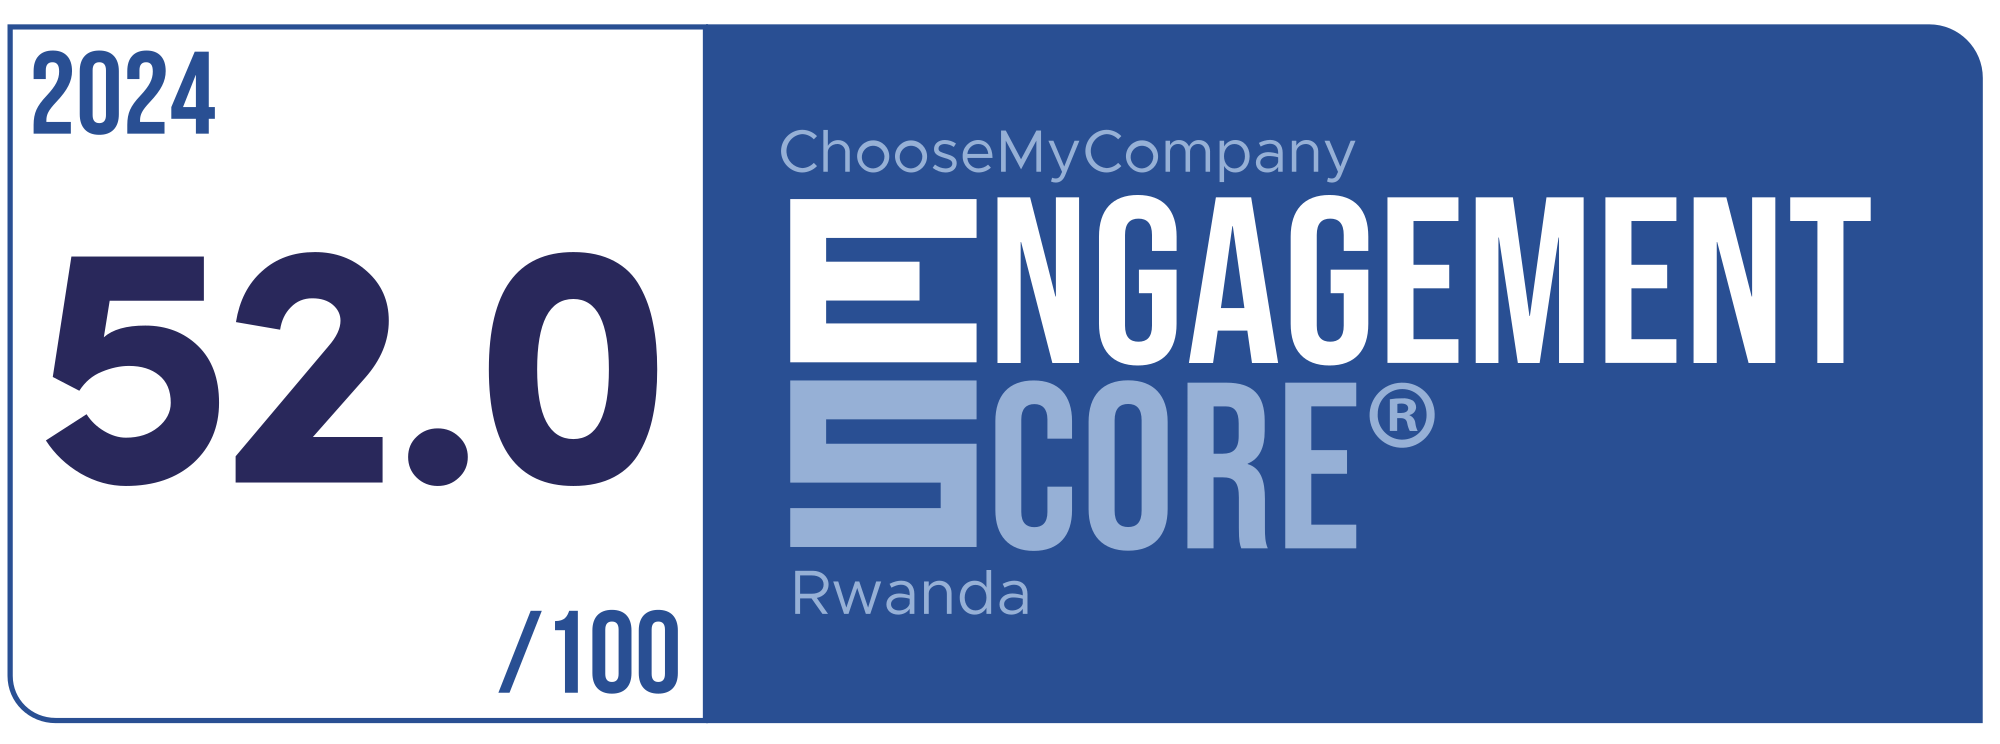 Label Engagement Score 2024 Rwanda